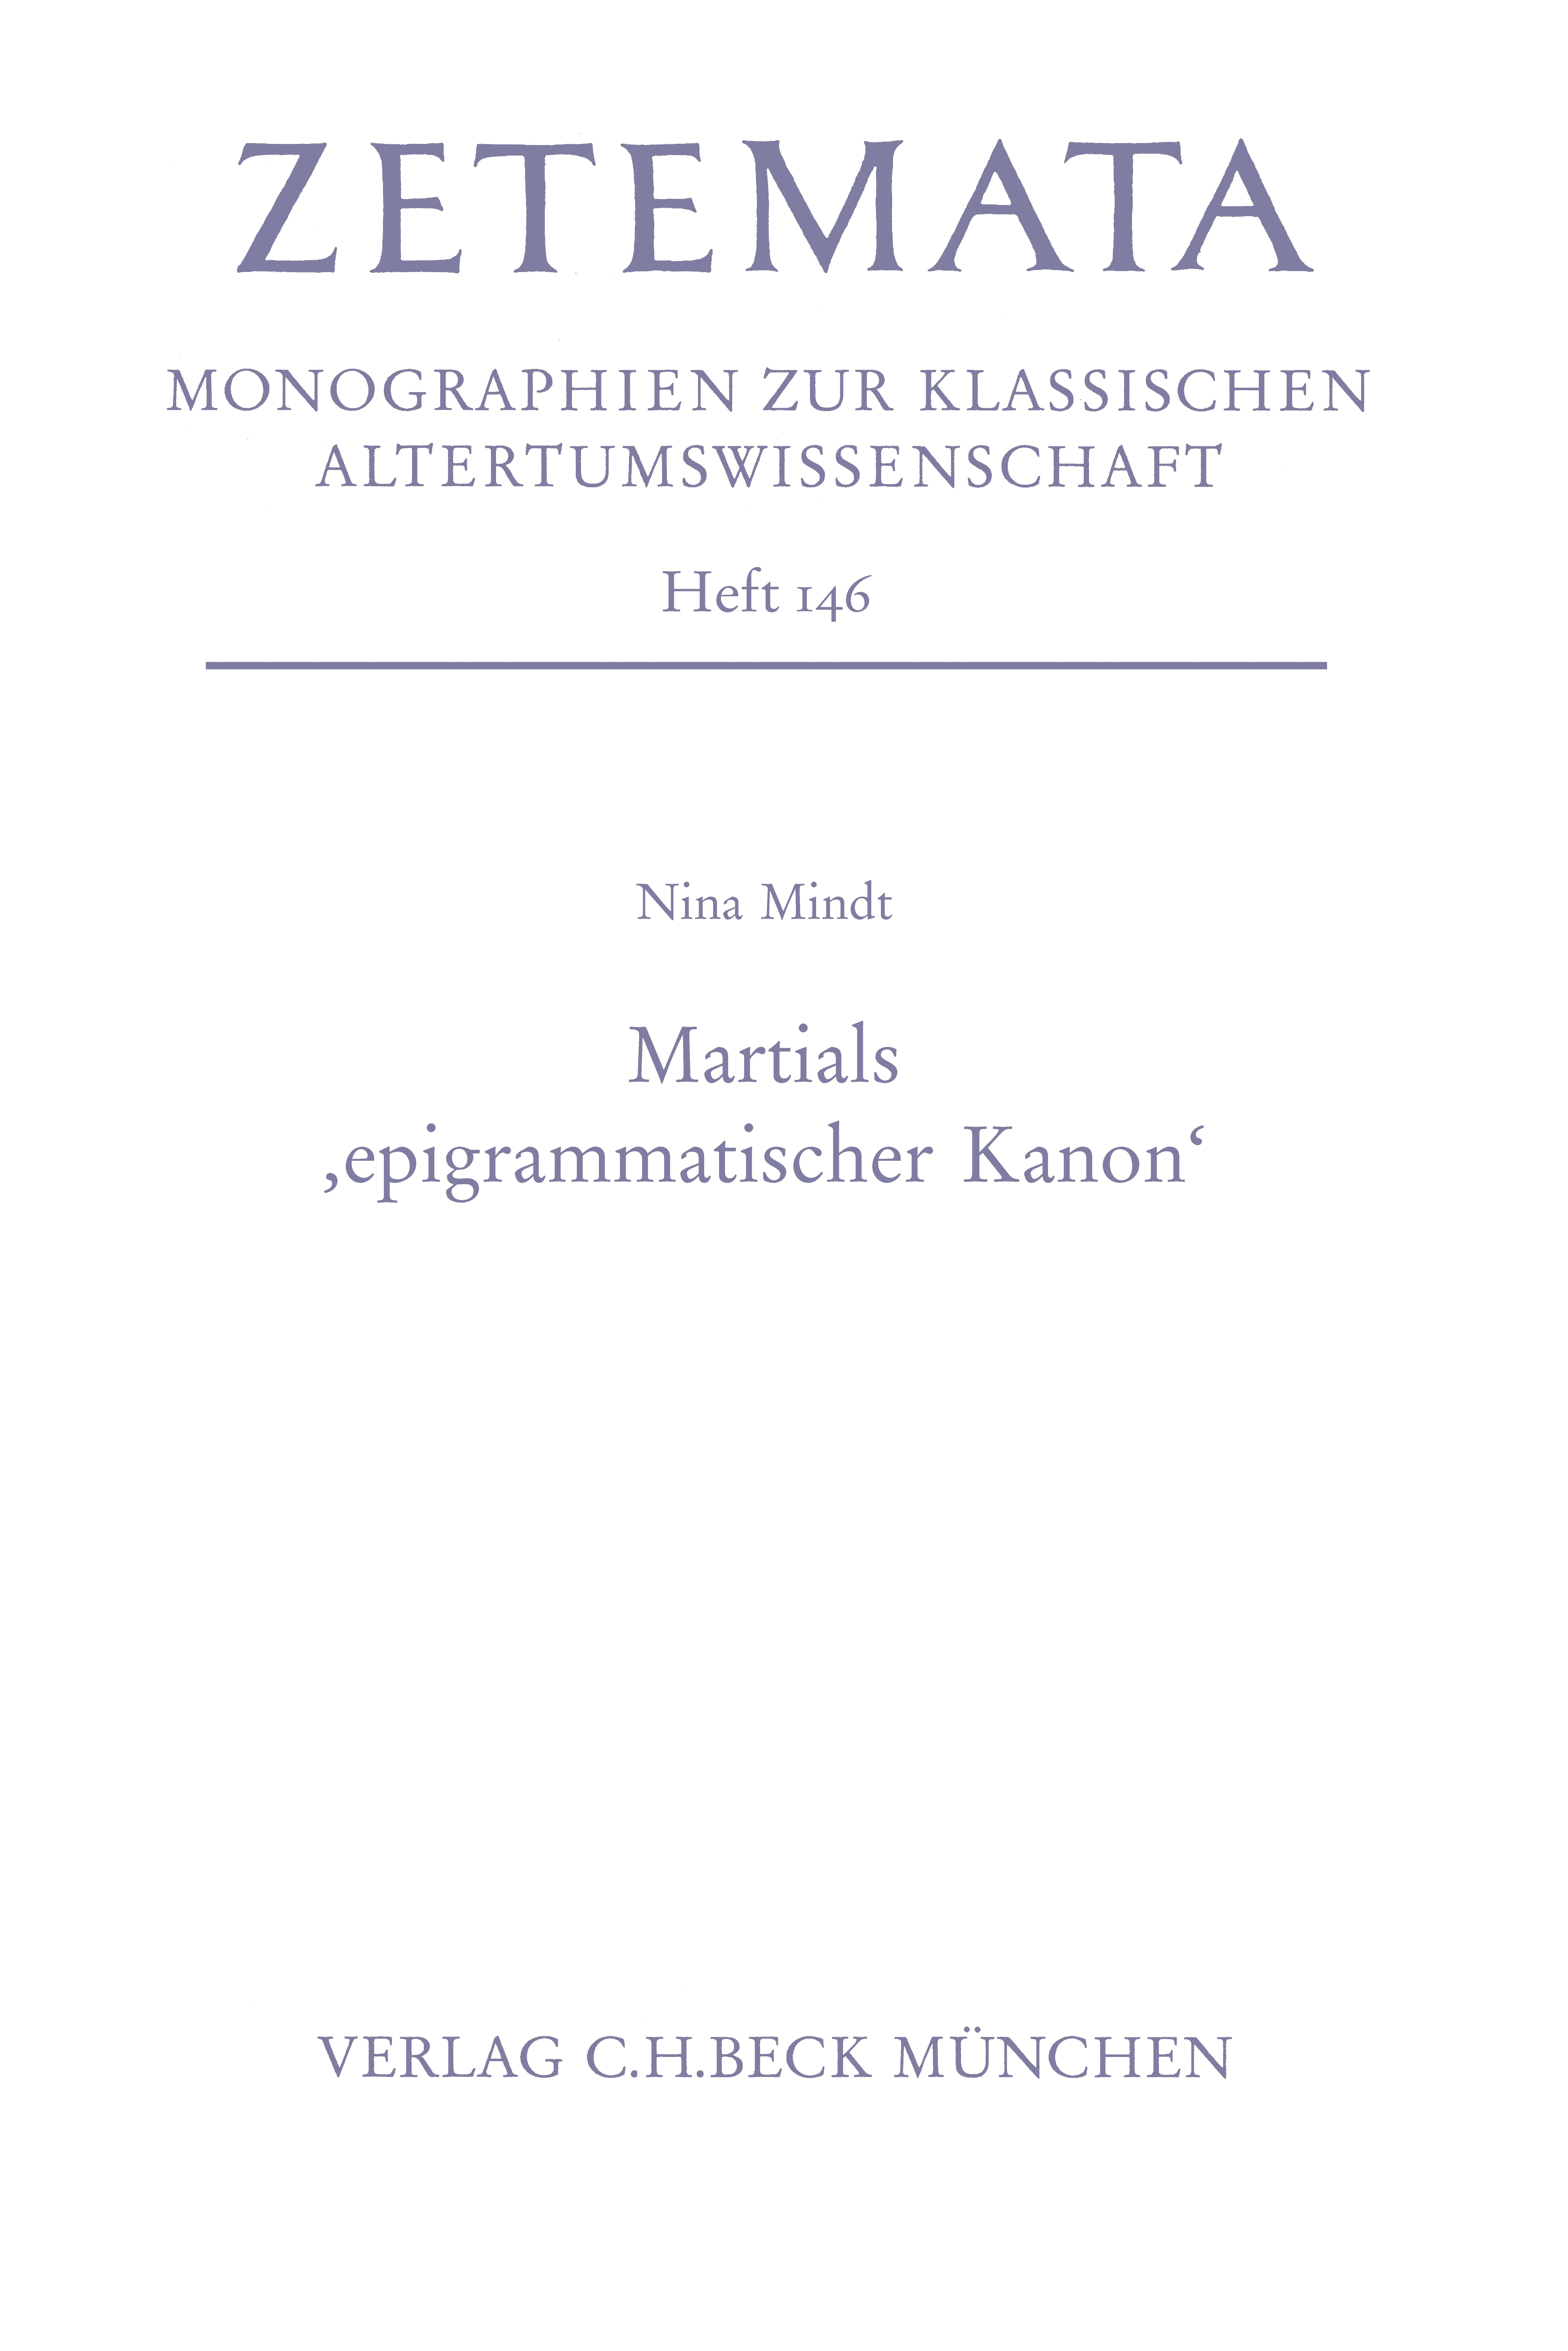 Cover: Mindt, Nina, Martials 'epigrammatischer Kanon'